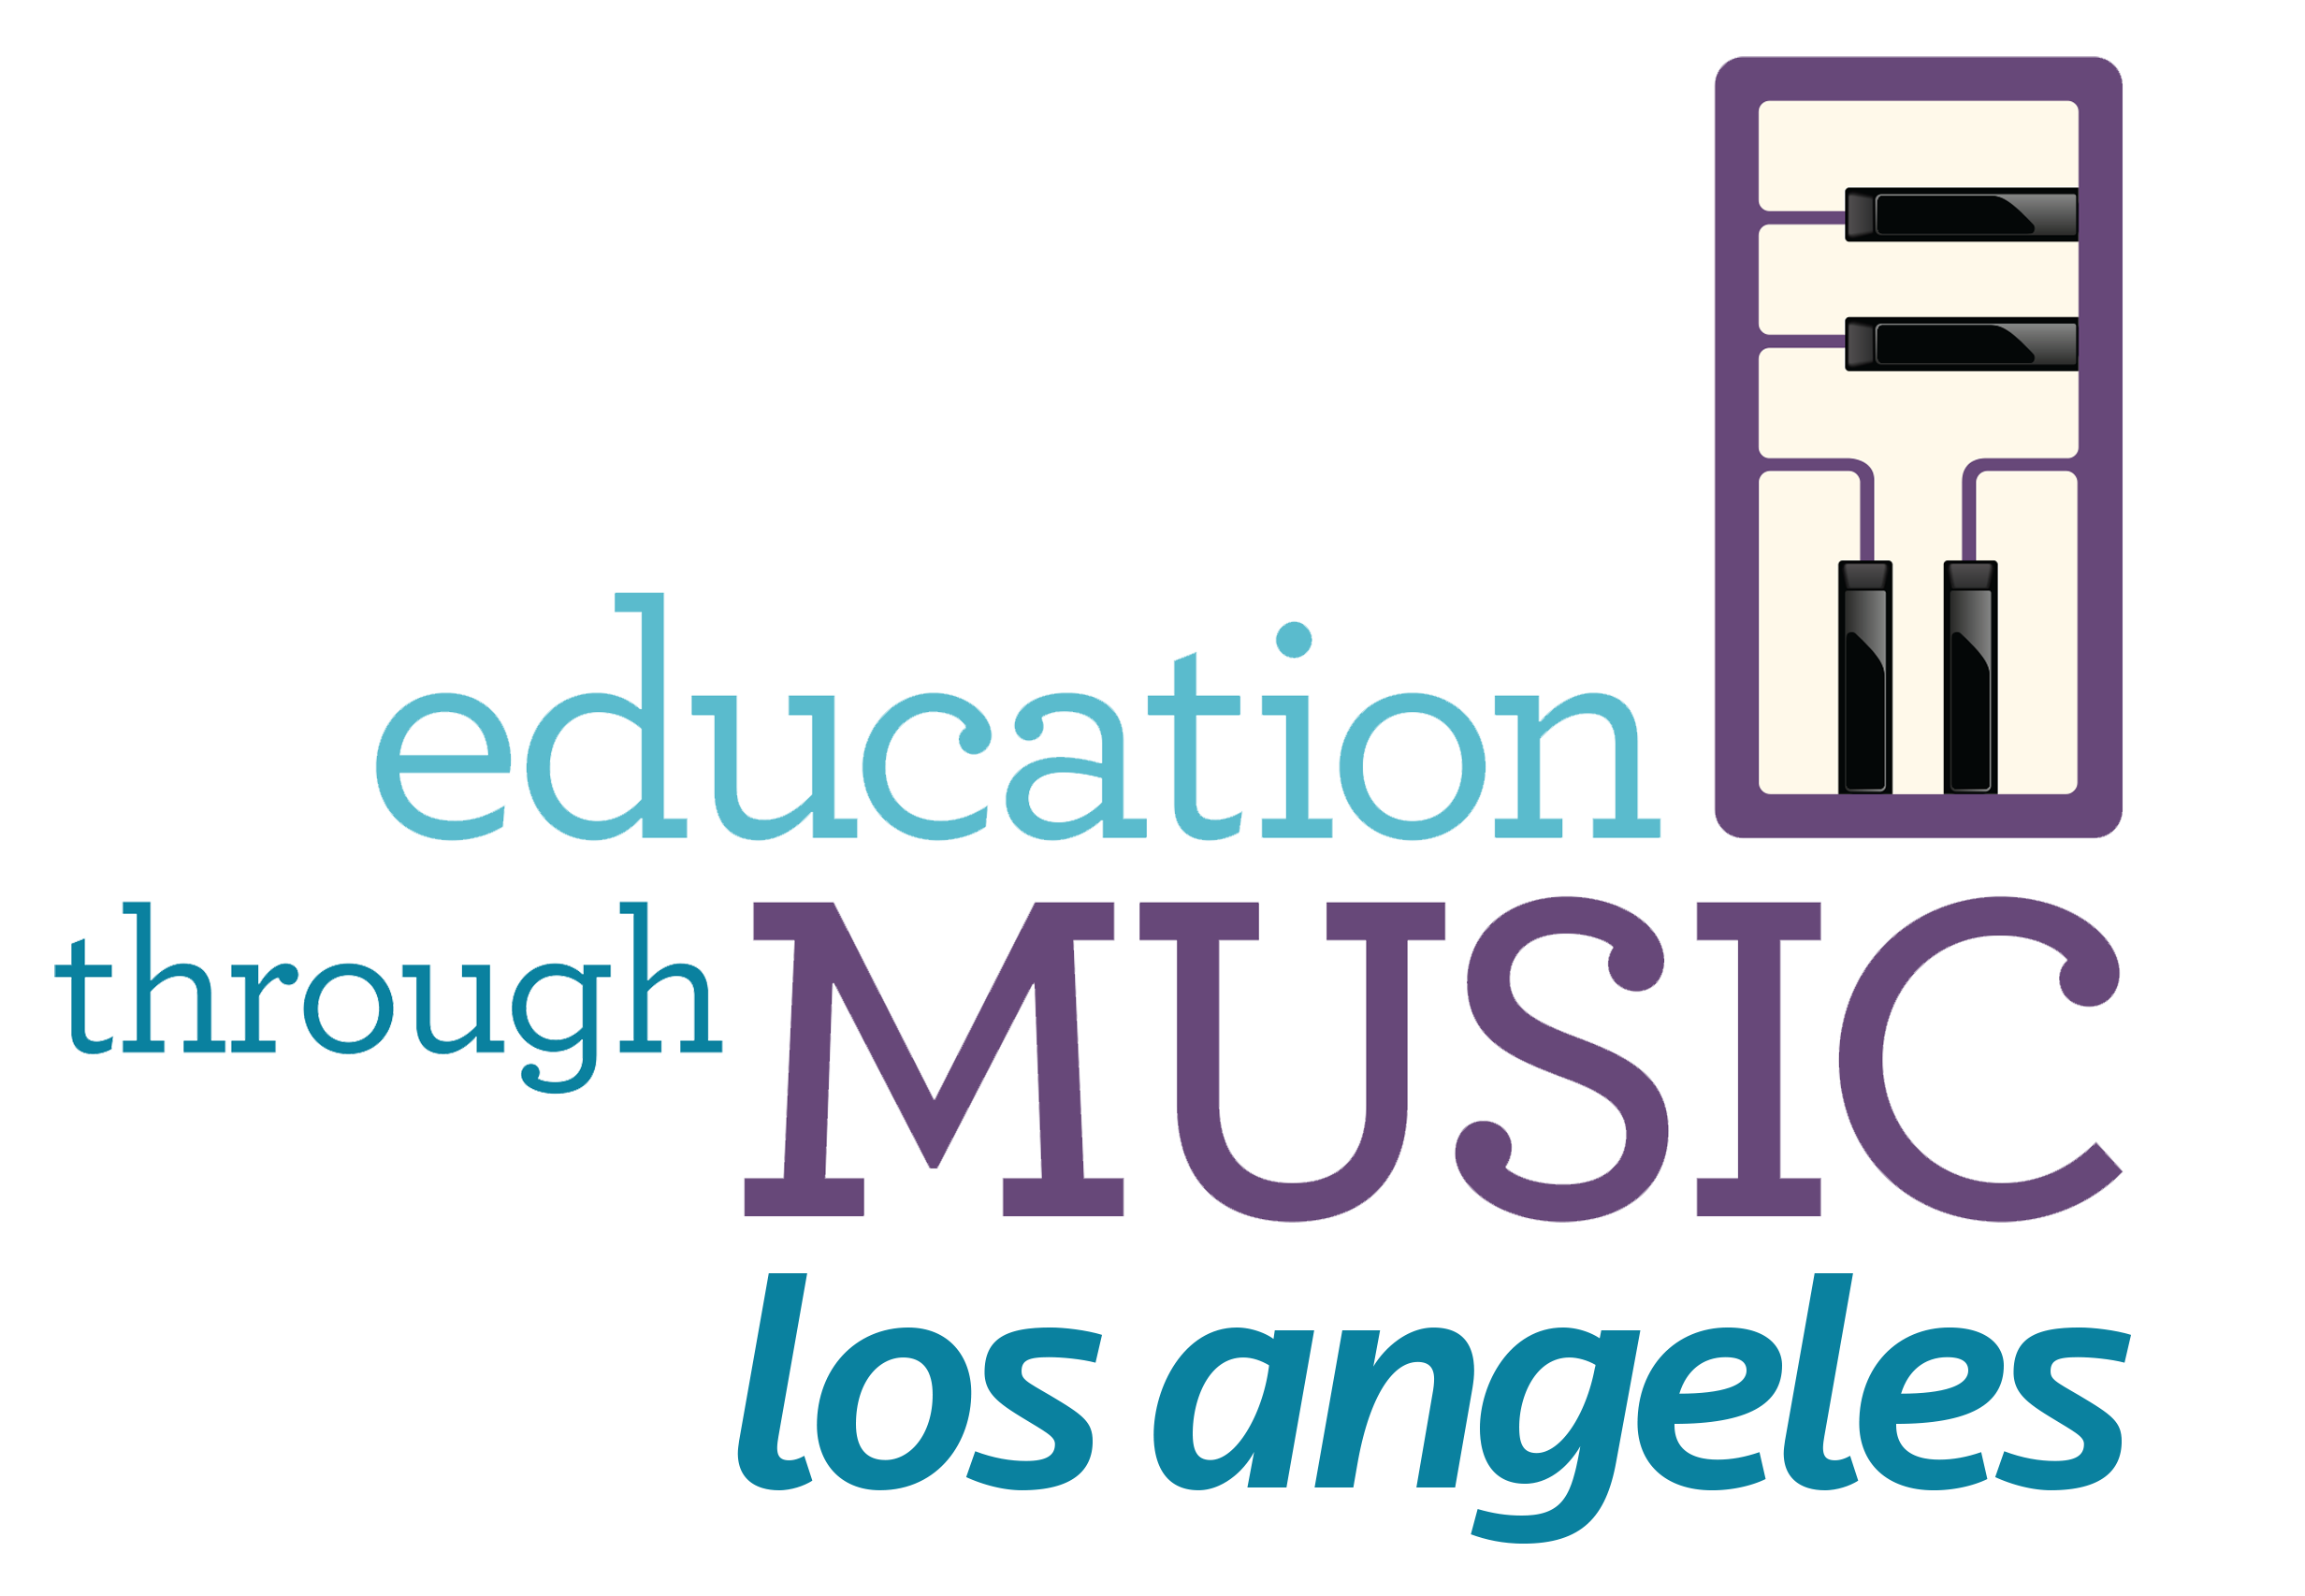 education through music